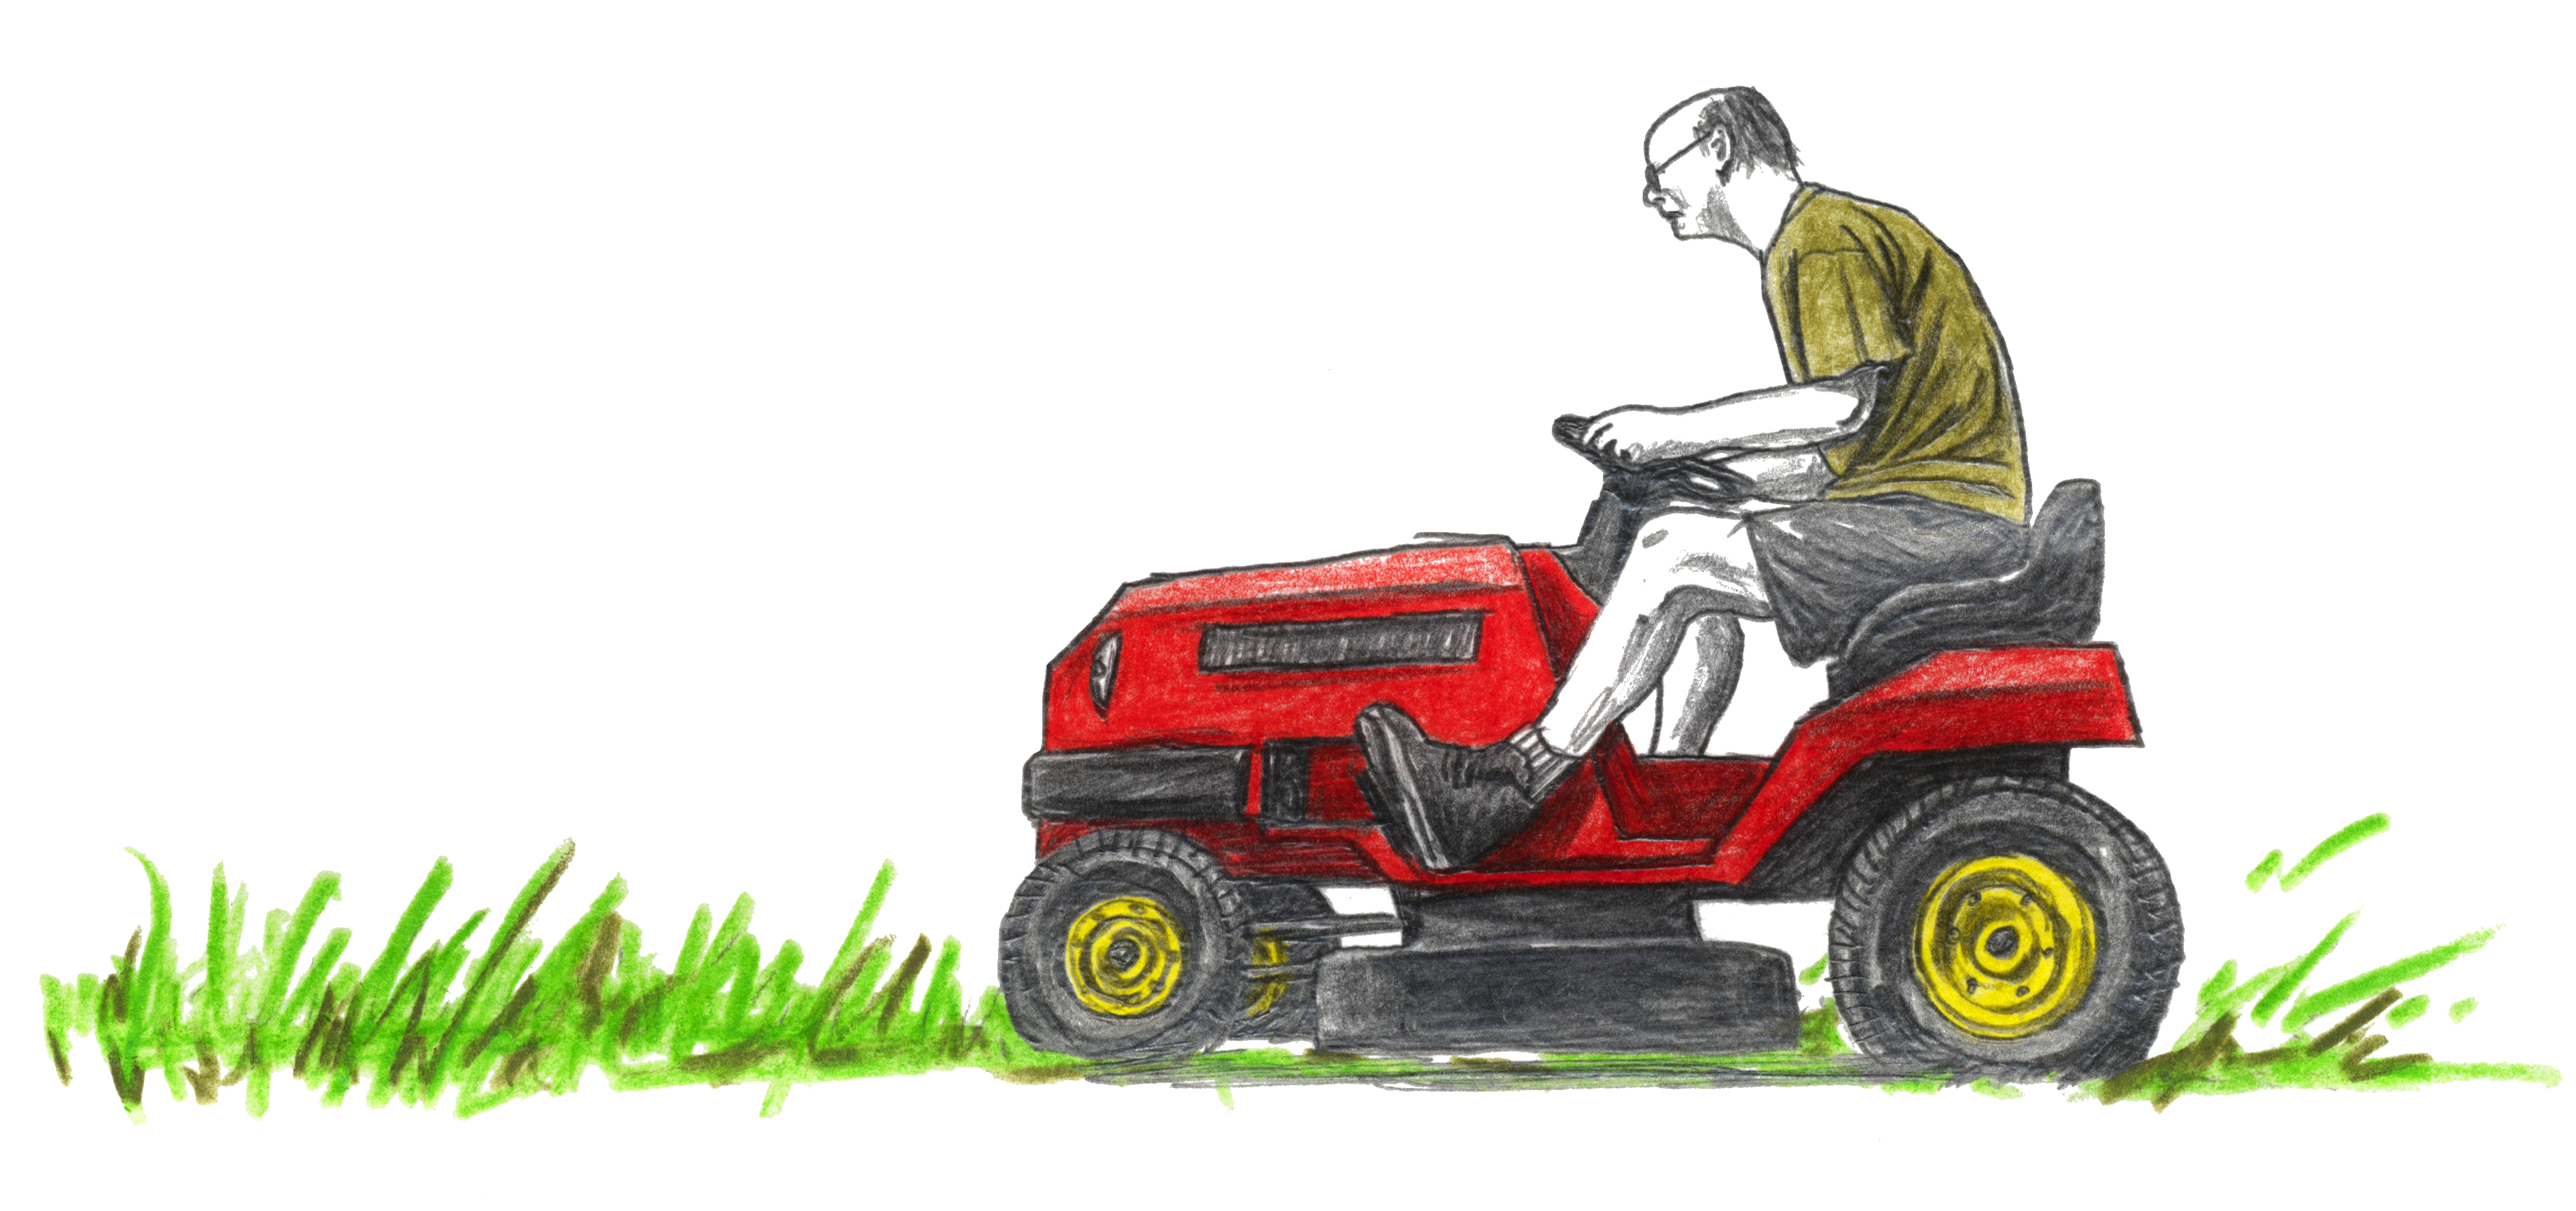 Illustration of an elderly man riding a lawnmower